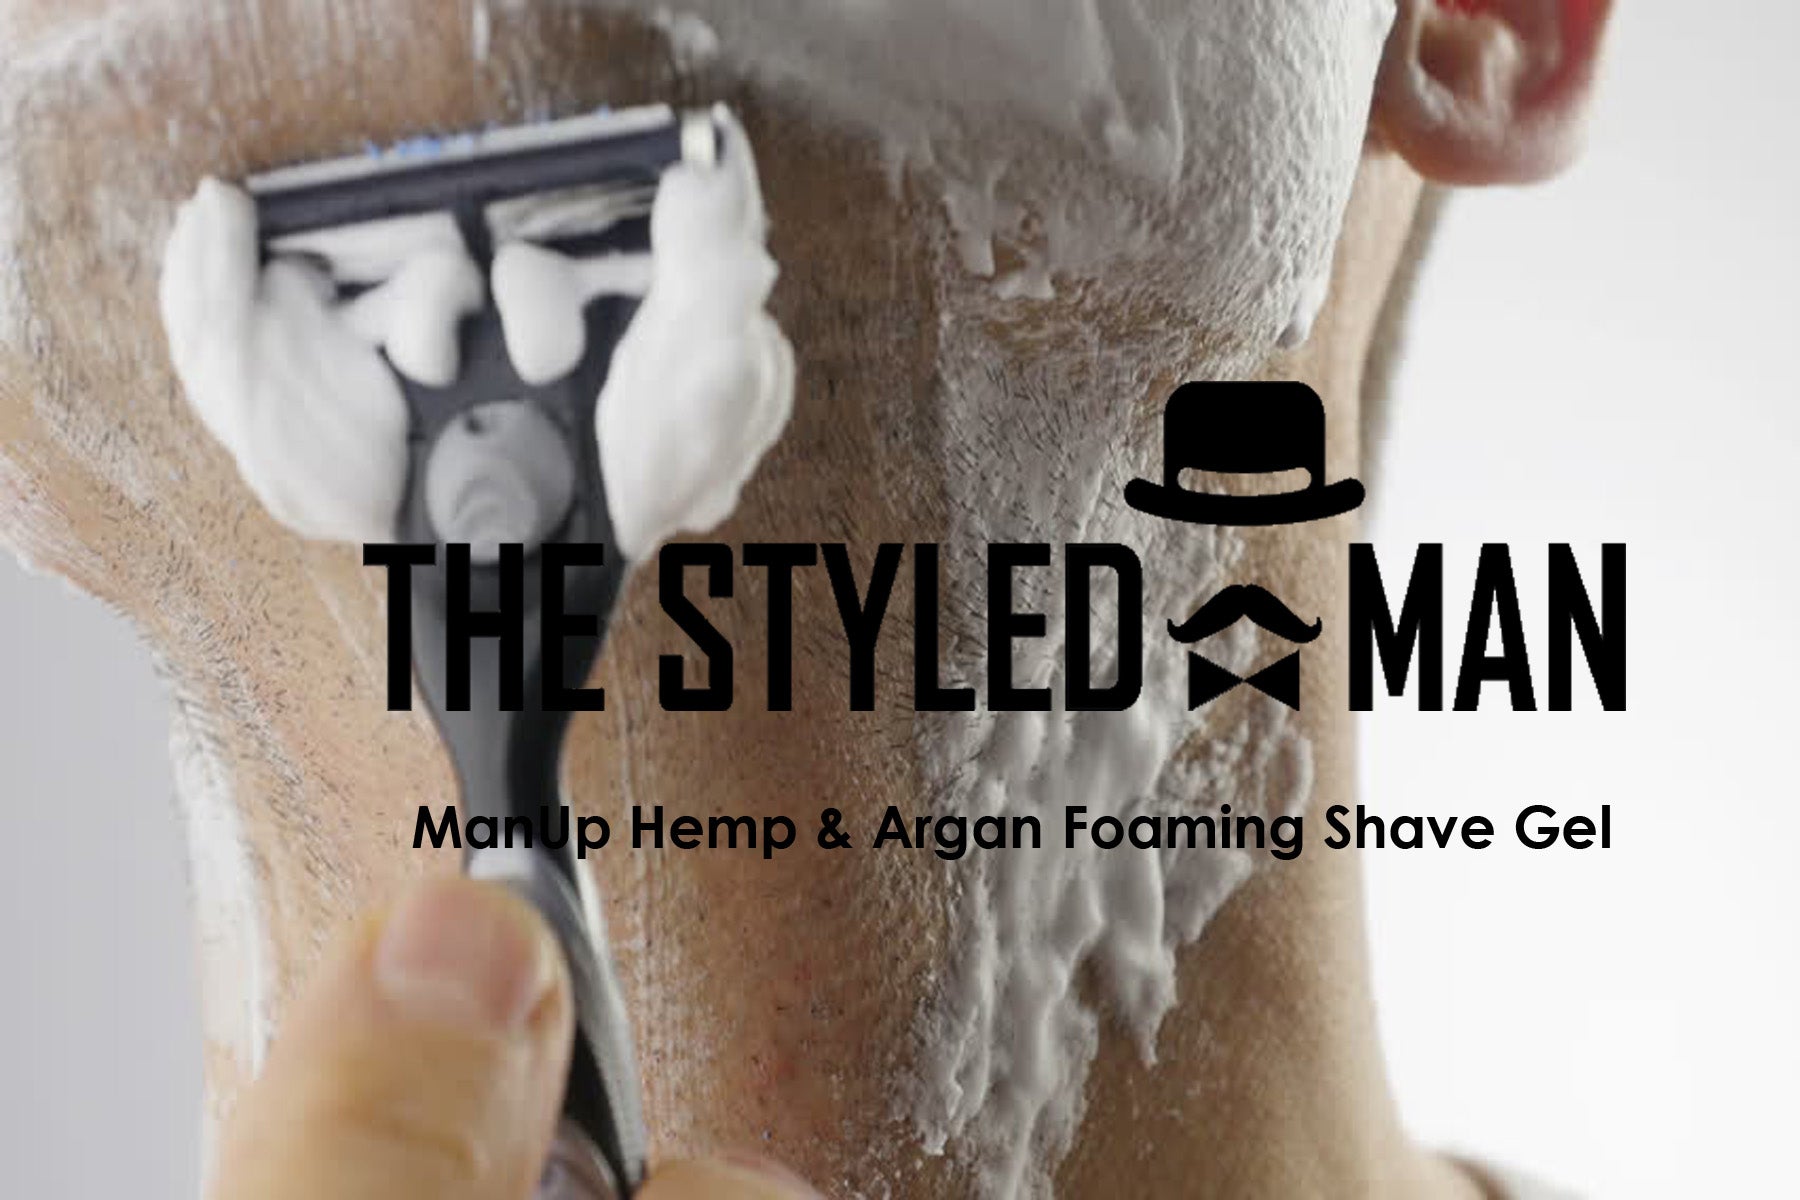 ManUp Hemp & Argan Foaming Shave Gel